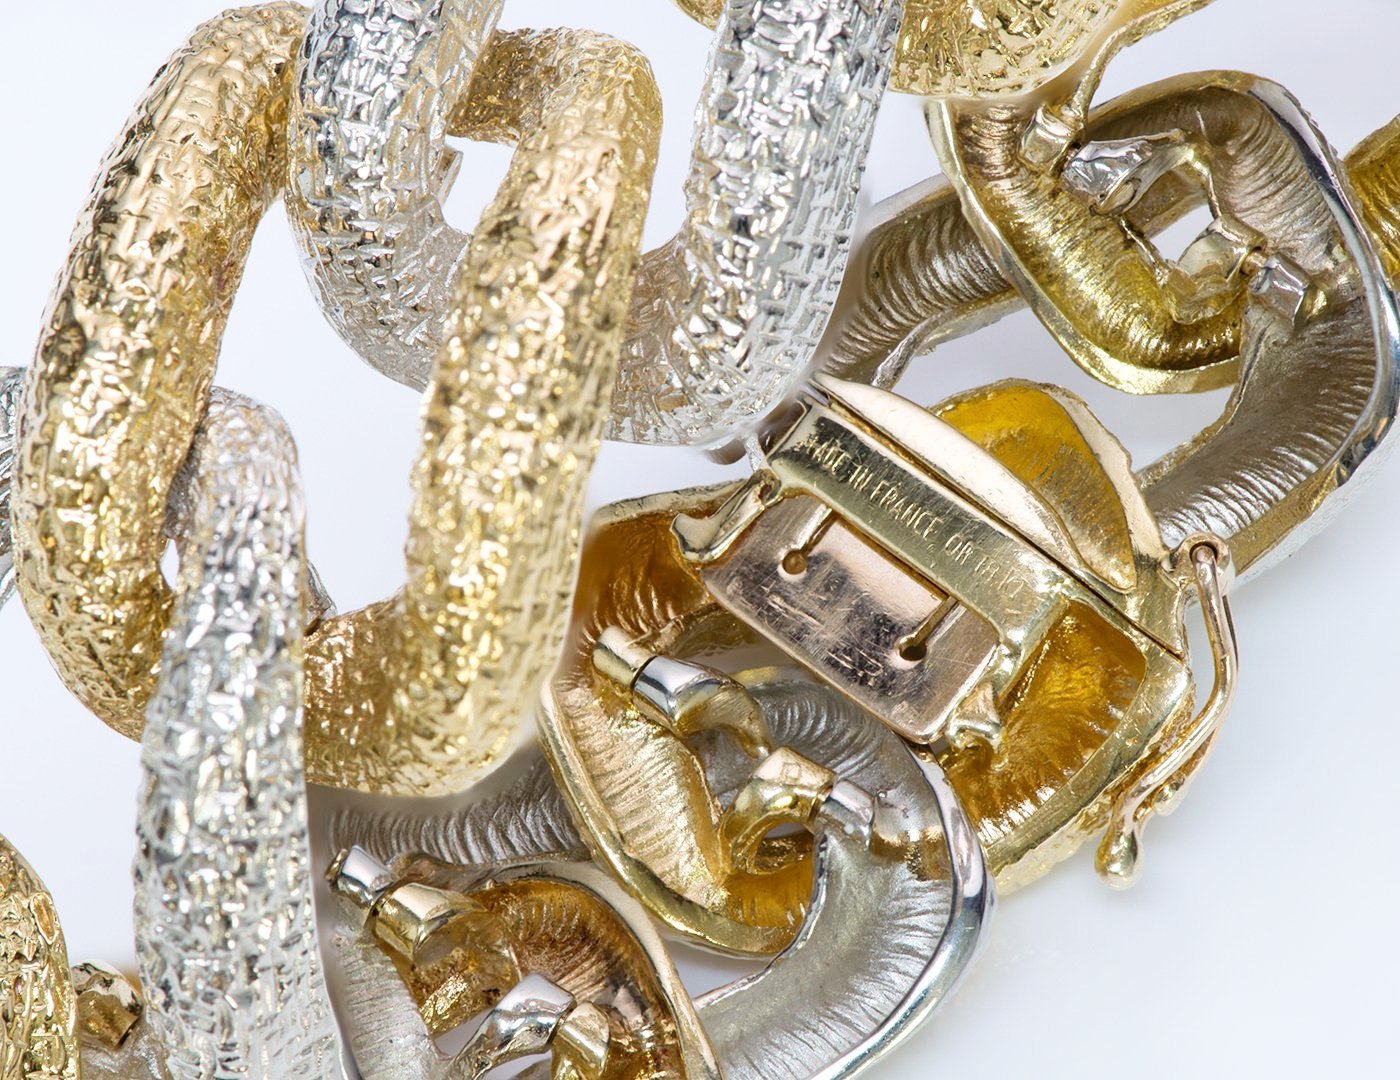 Cartier France 18K Gold Link Bracelet - DSF Antique Jewelry